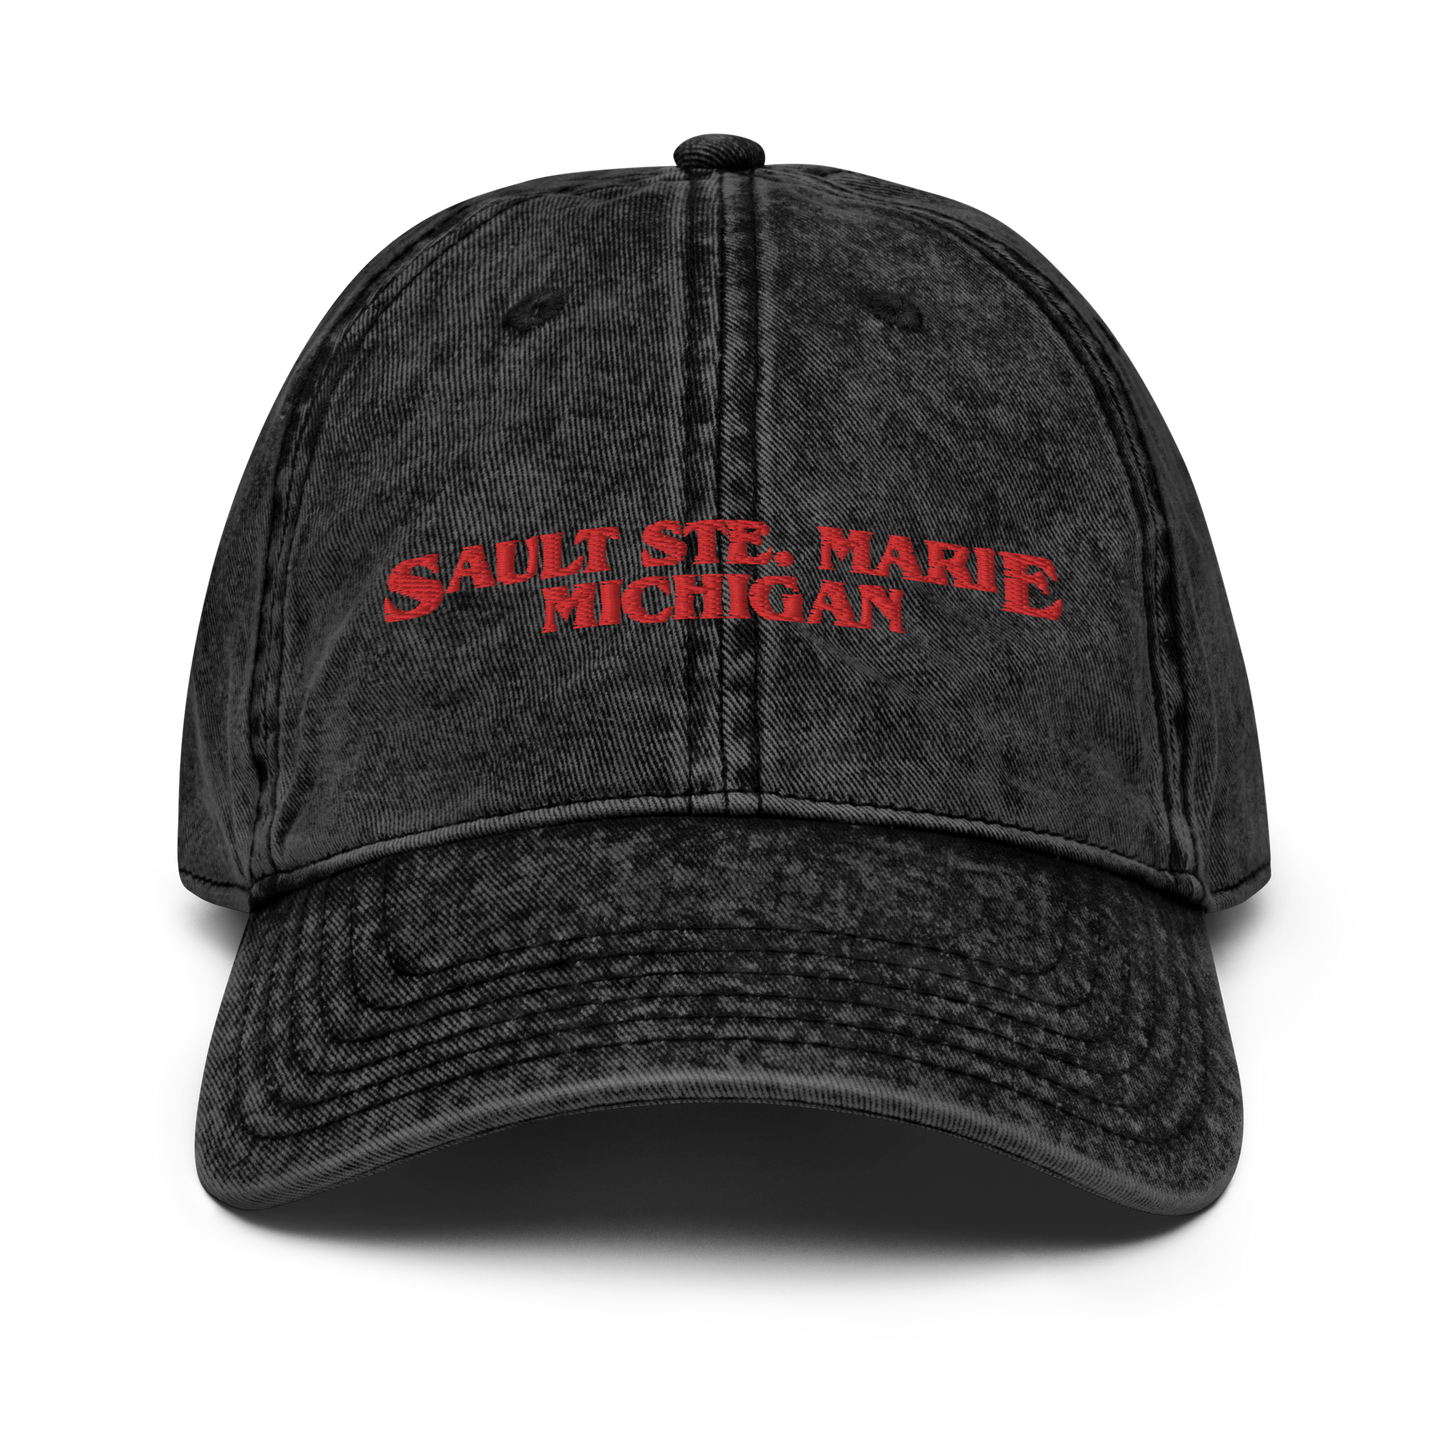 'Sault Ste. Marie' Vintage Baseball Cap (1980s Drama Parody)